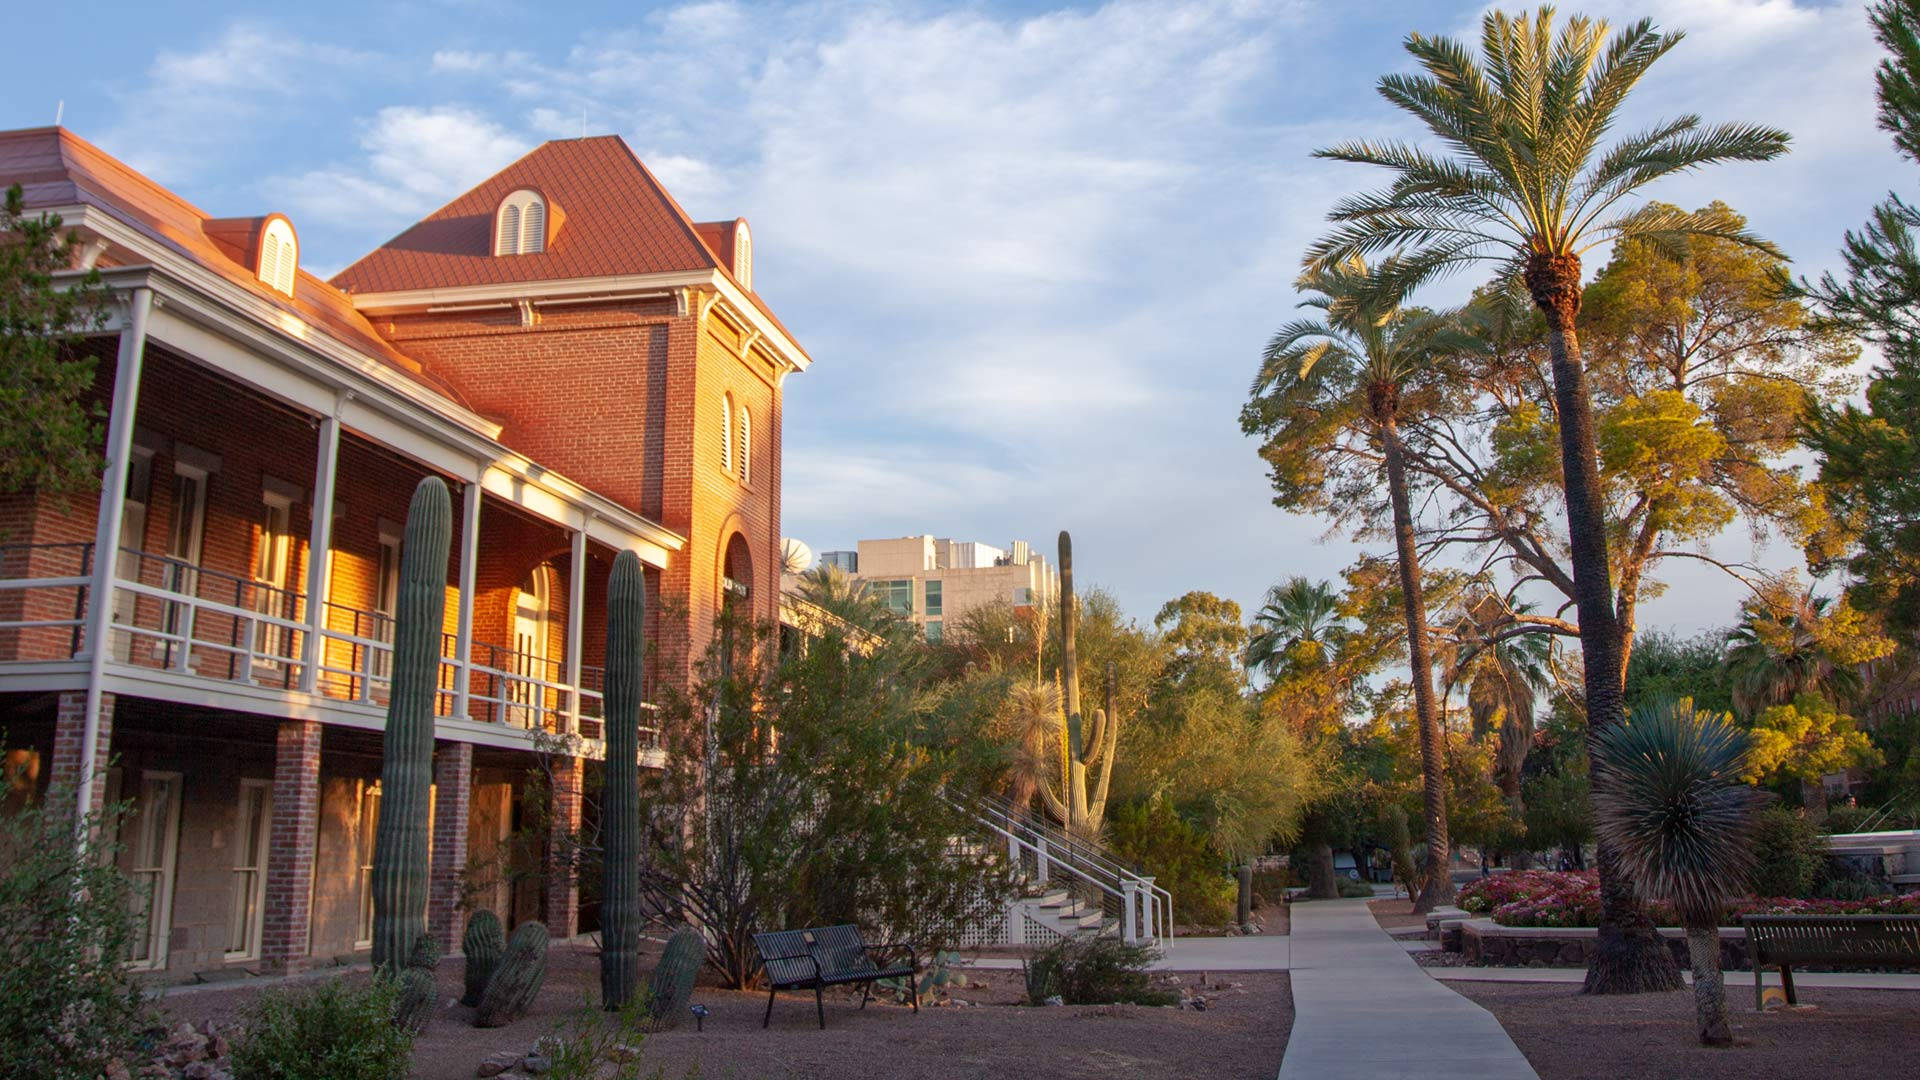 Splendid View Of The University Of Arizona From The Balcony Background